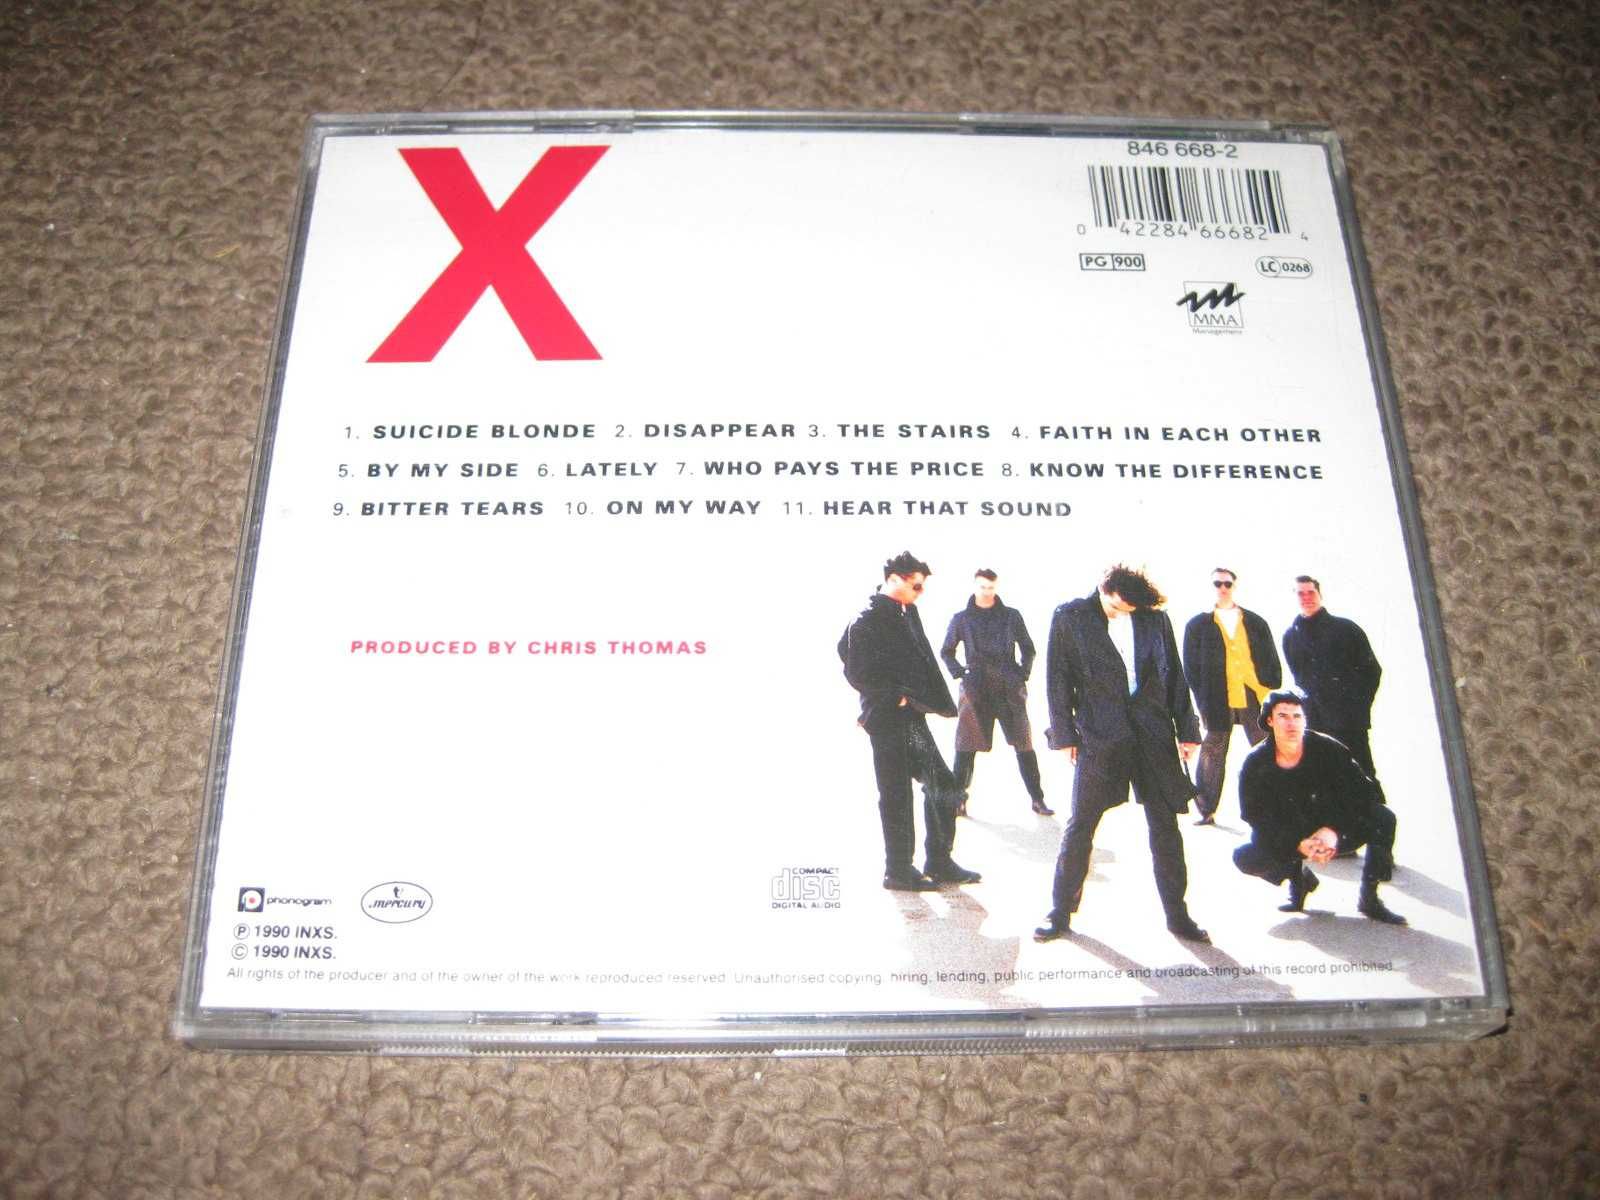 CD dos INXS "X" Portes Grátis!